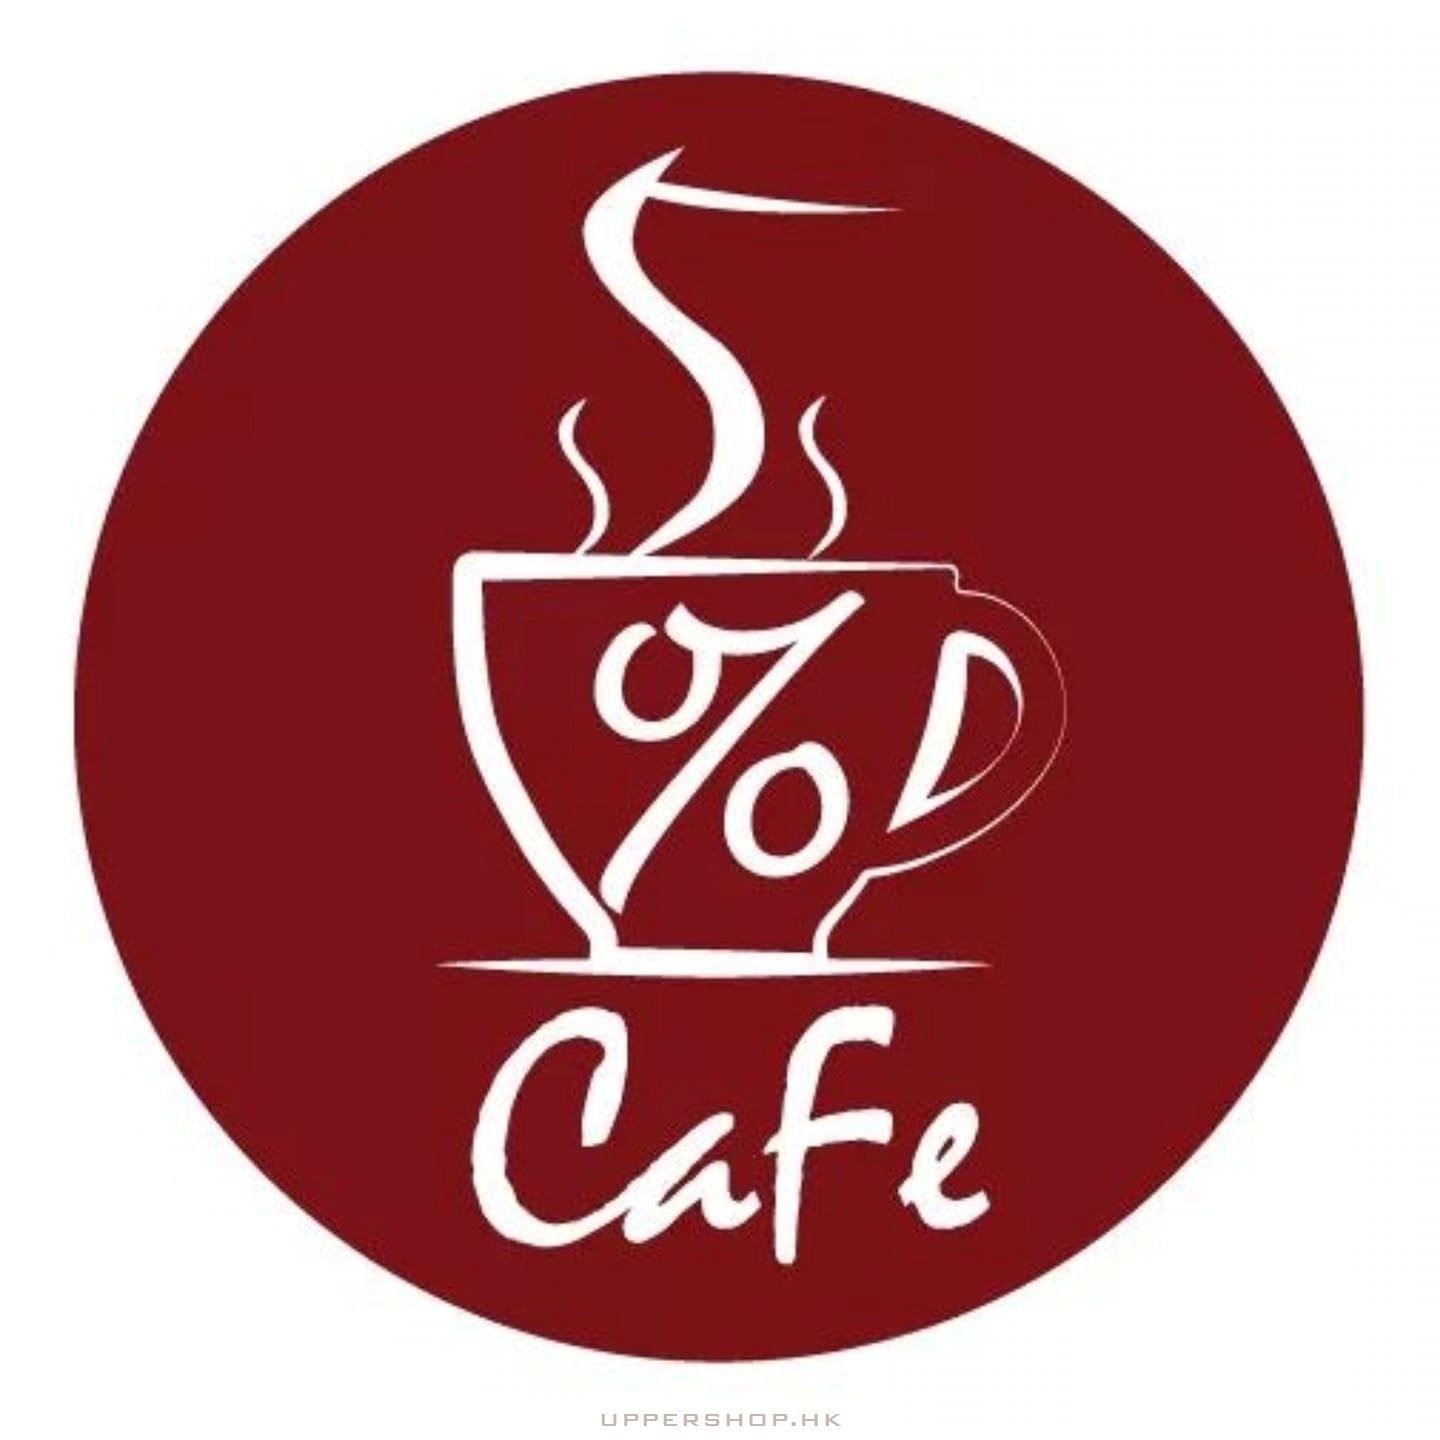 5% Cafe